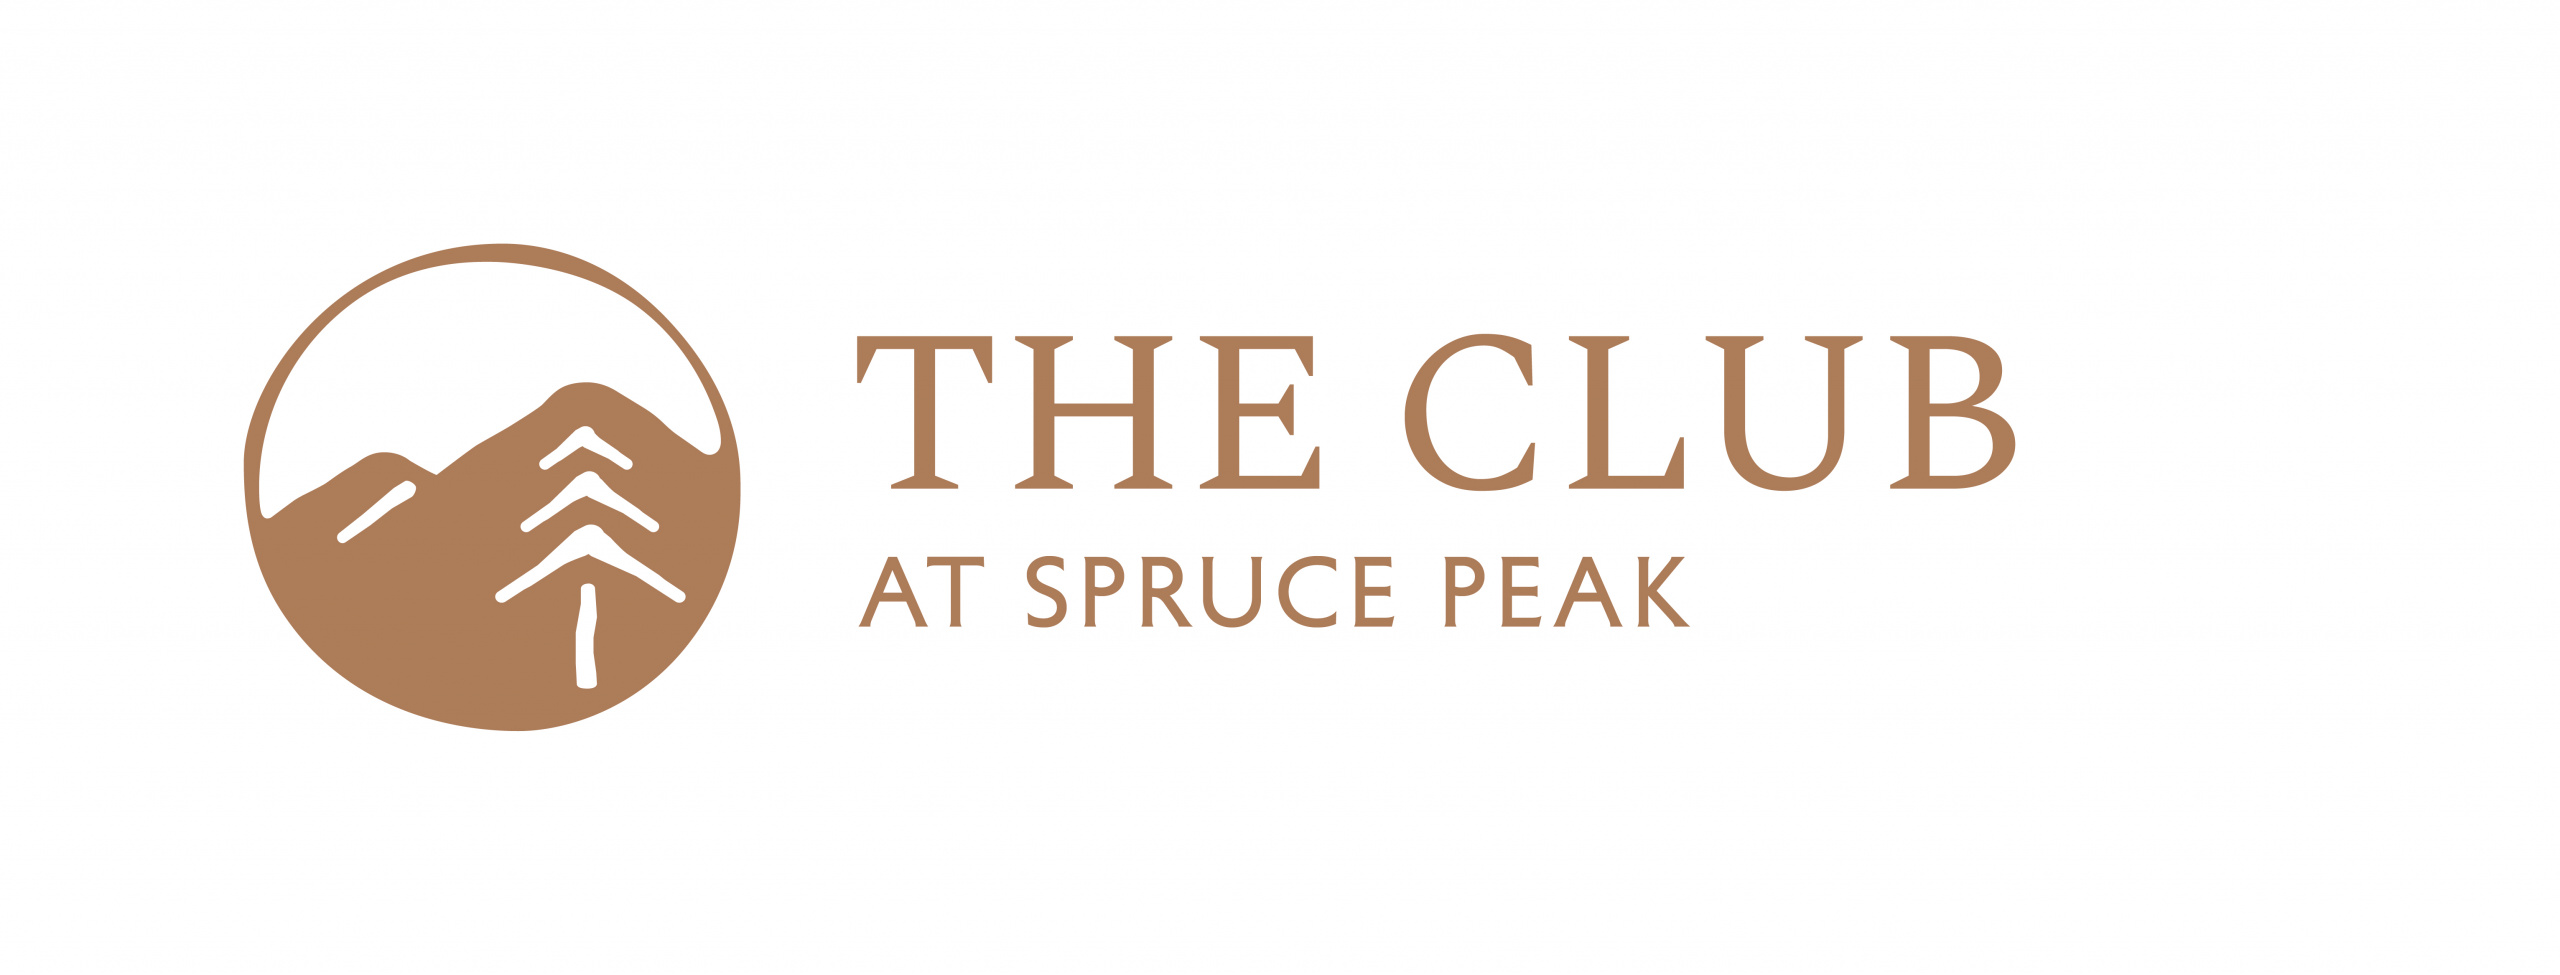 The Club at Spruce Peak